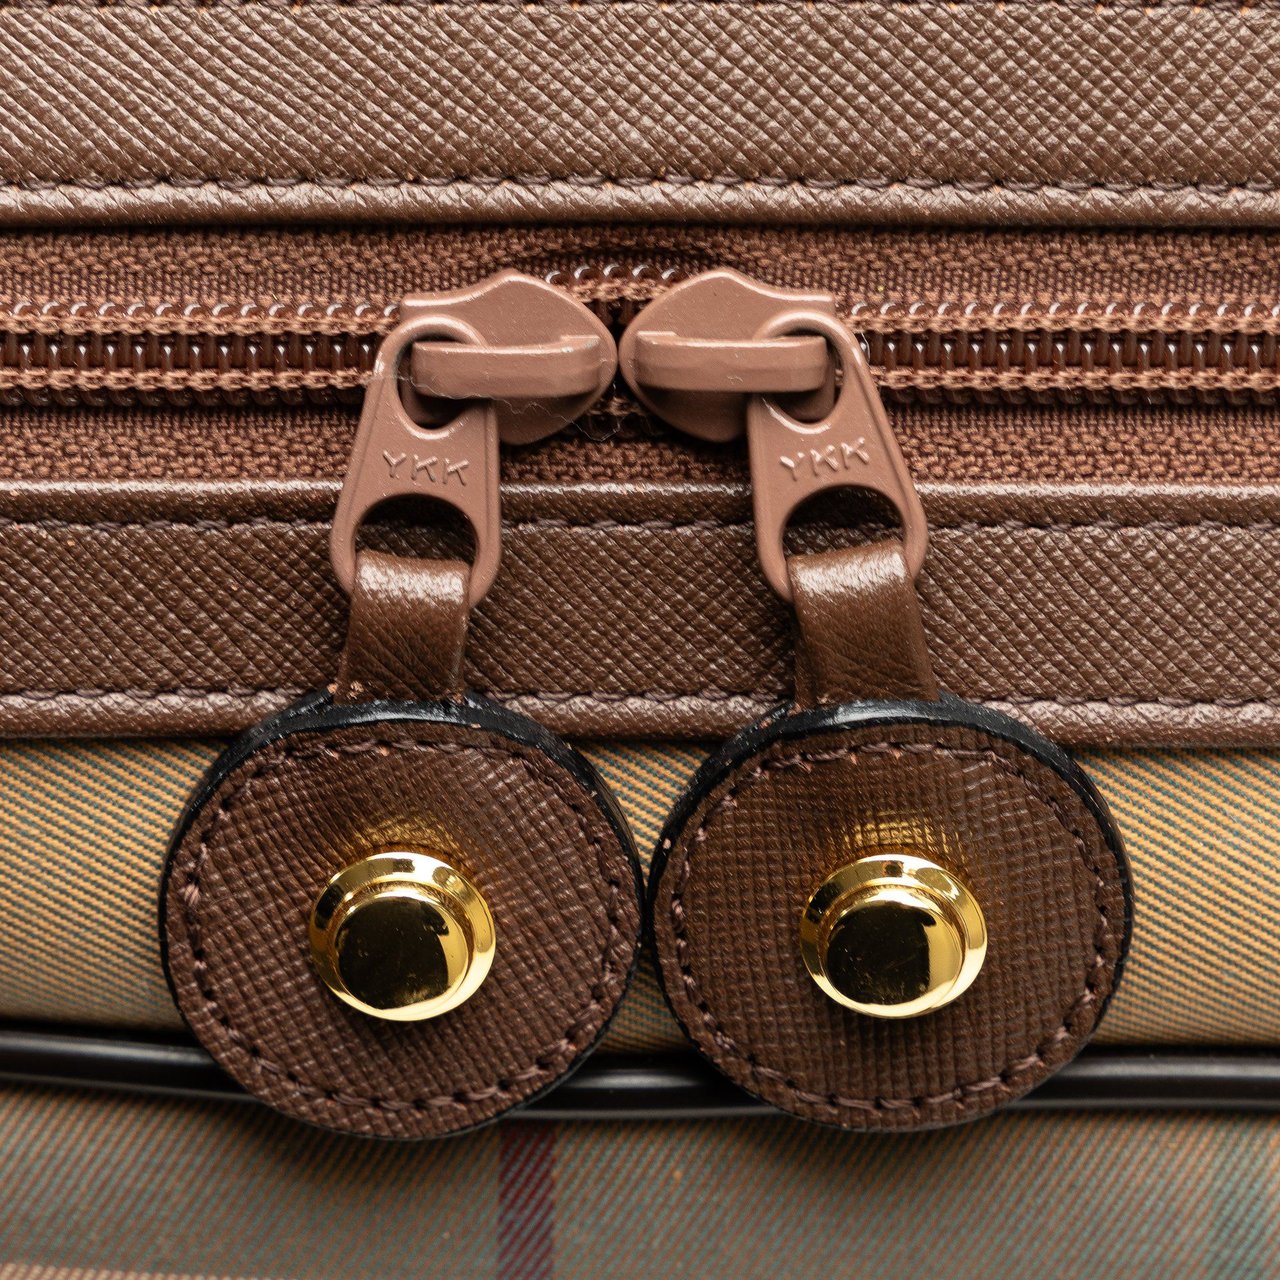 Burberry Vintage Check Travel Bag Bruin